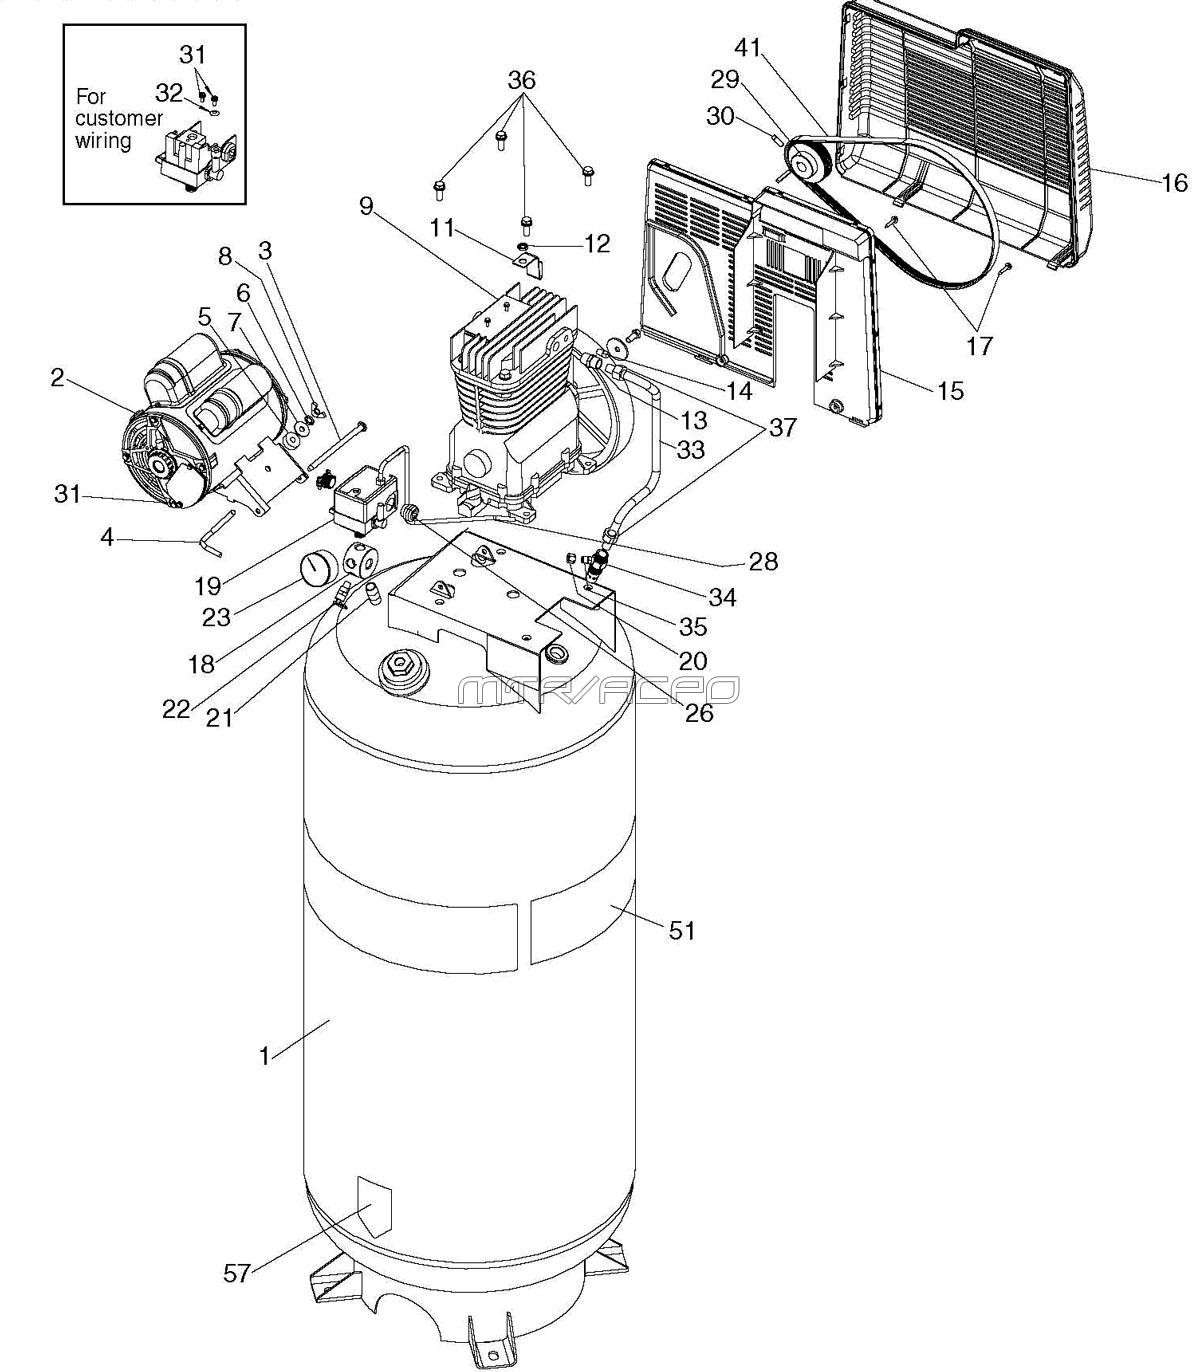 CPLC7060V1 Air pressor Parts schematic